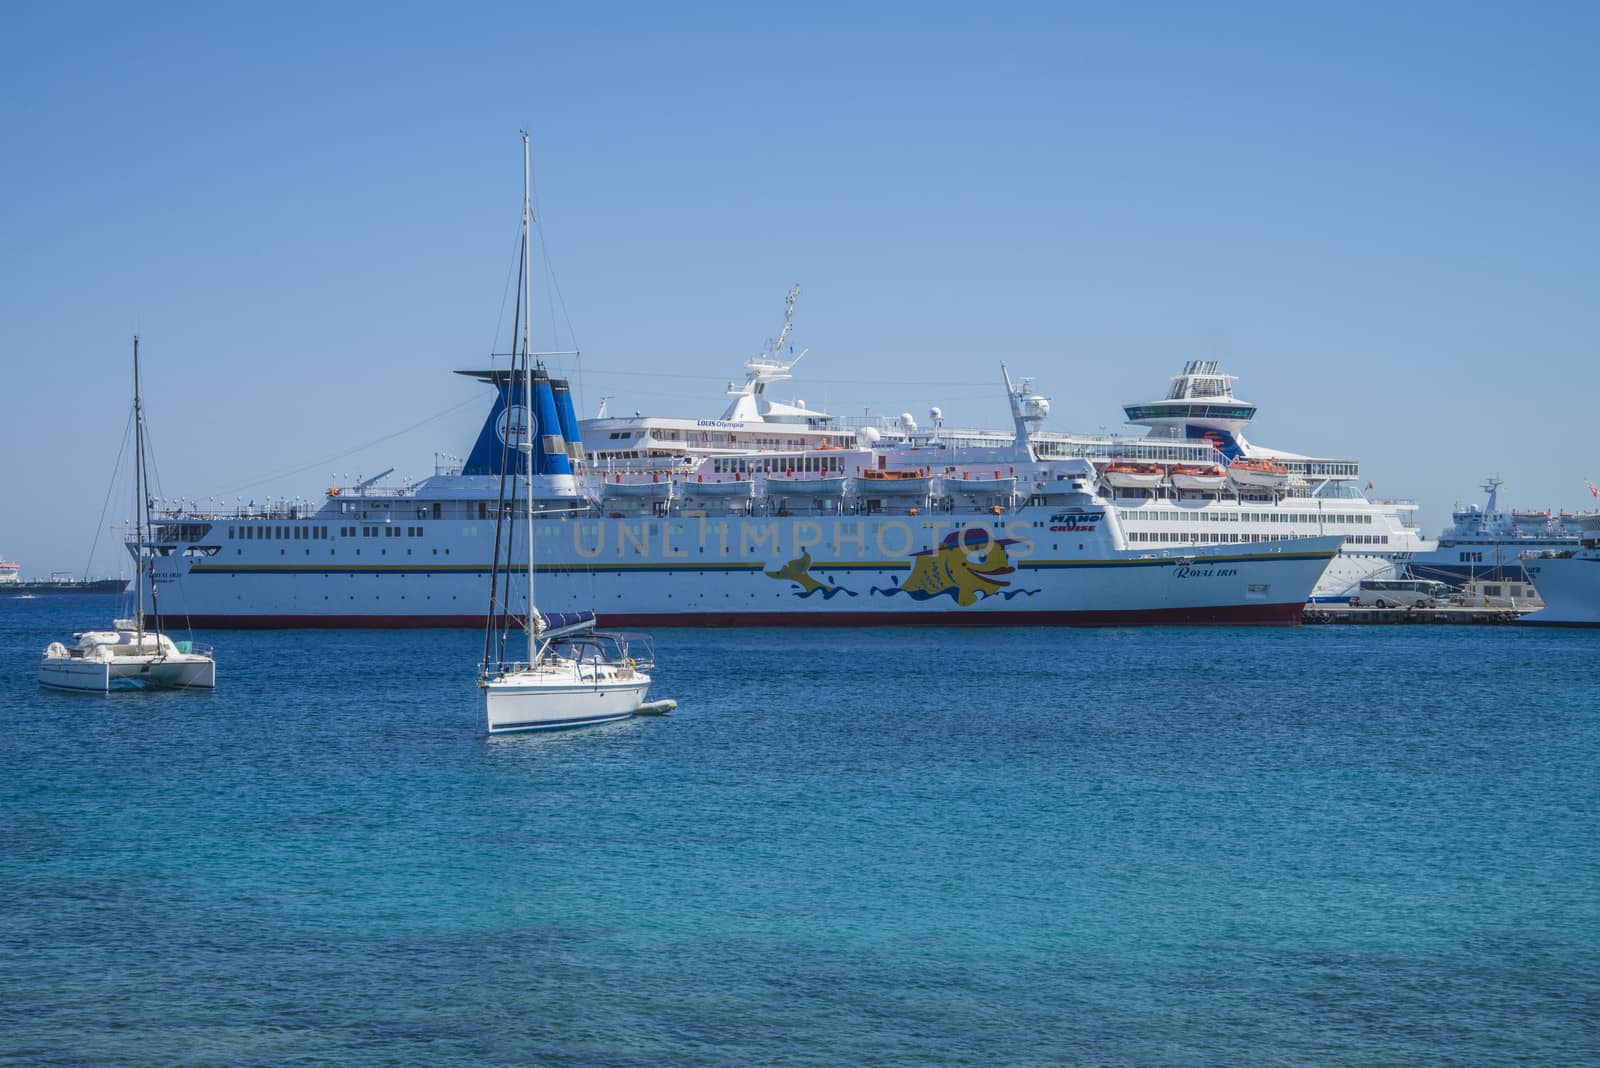 cruise ship in mandraki harbour by steirus